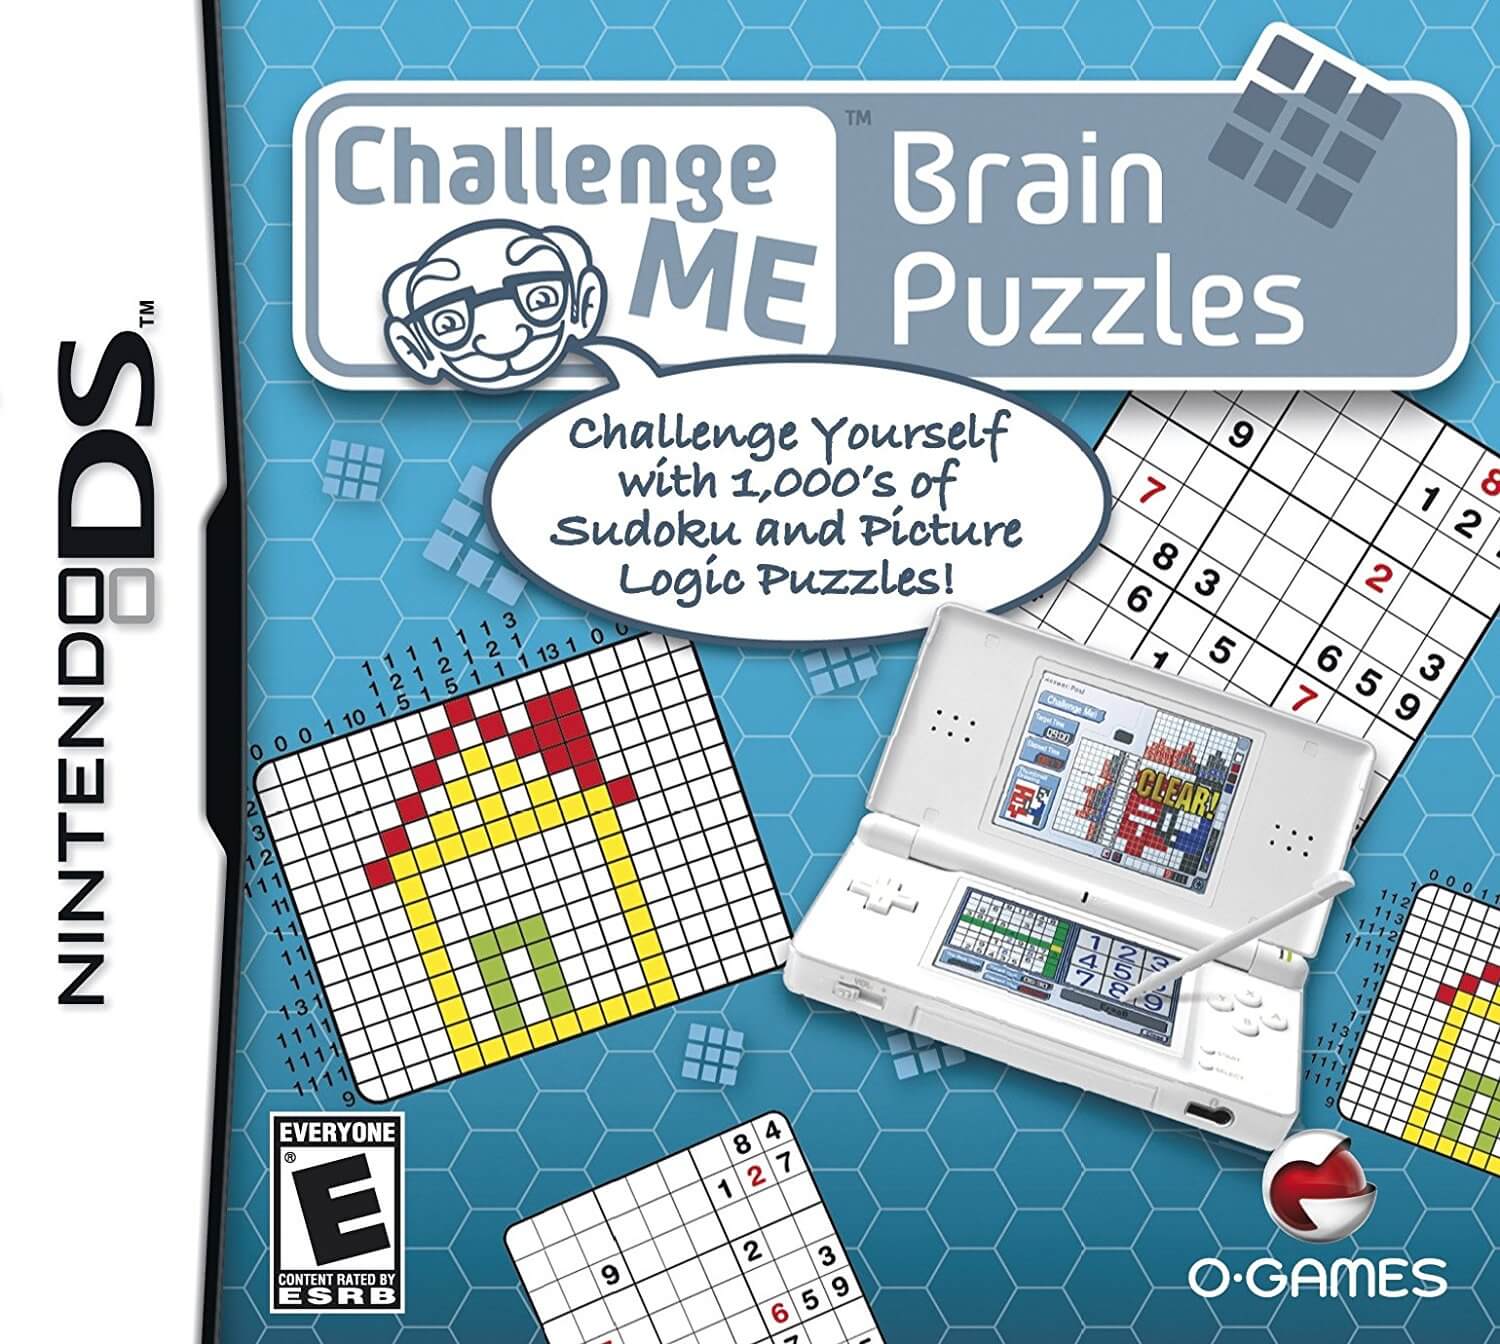 Игра brain puzzle. Brain Puzzles логические игры. Головоломка NDS. Brain games the challenging Puzzle. Nintendo DS головоломка.